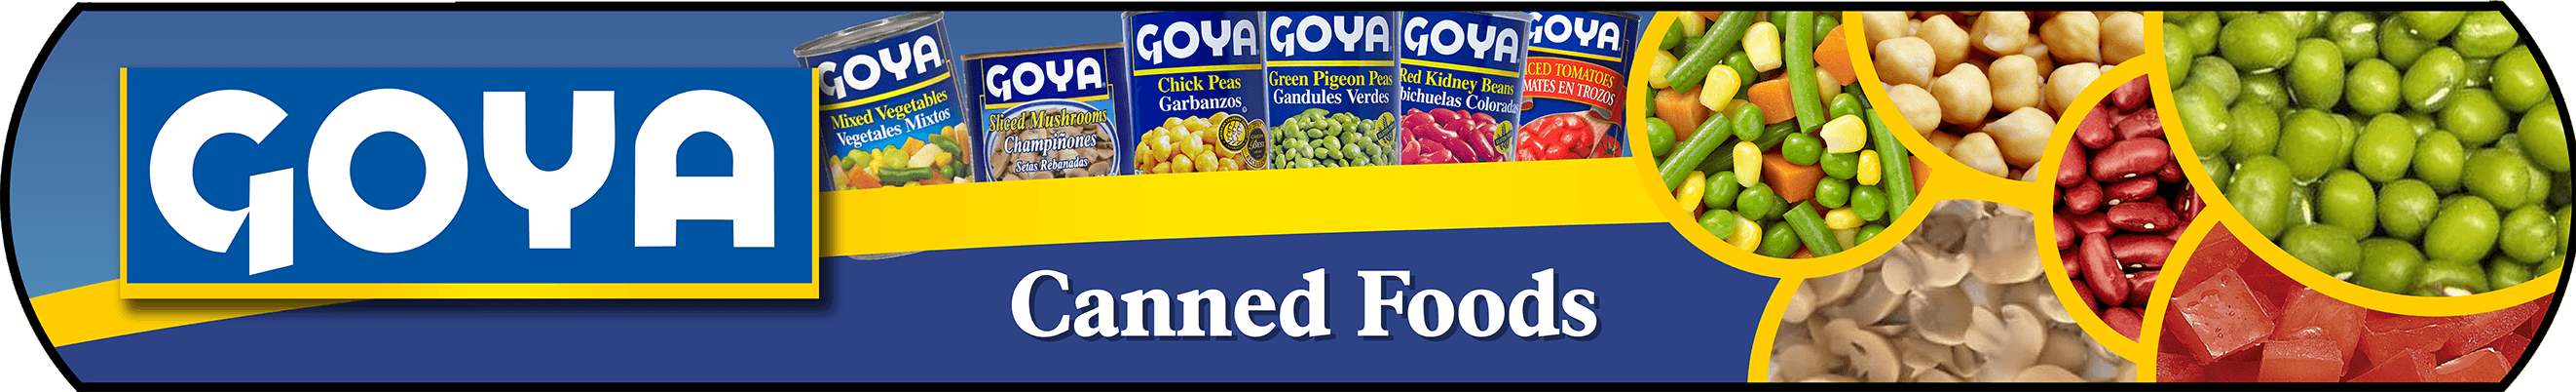 Goya Canned Goods Banner